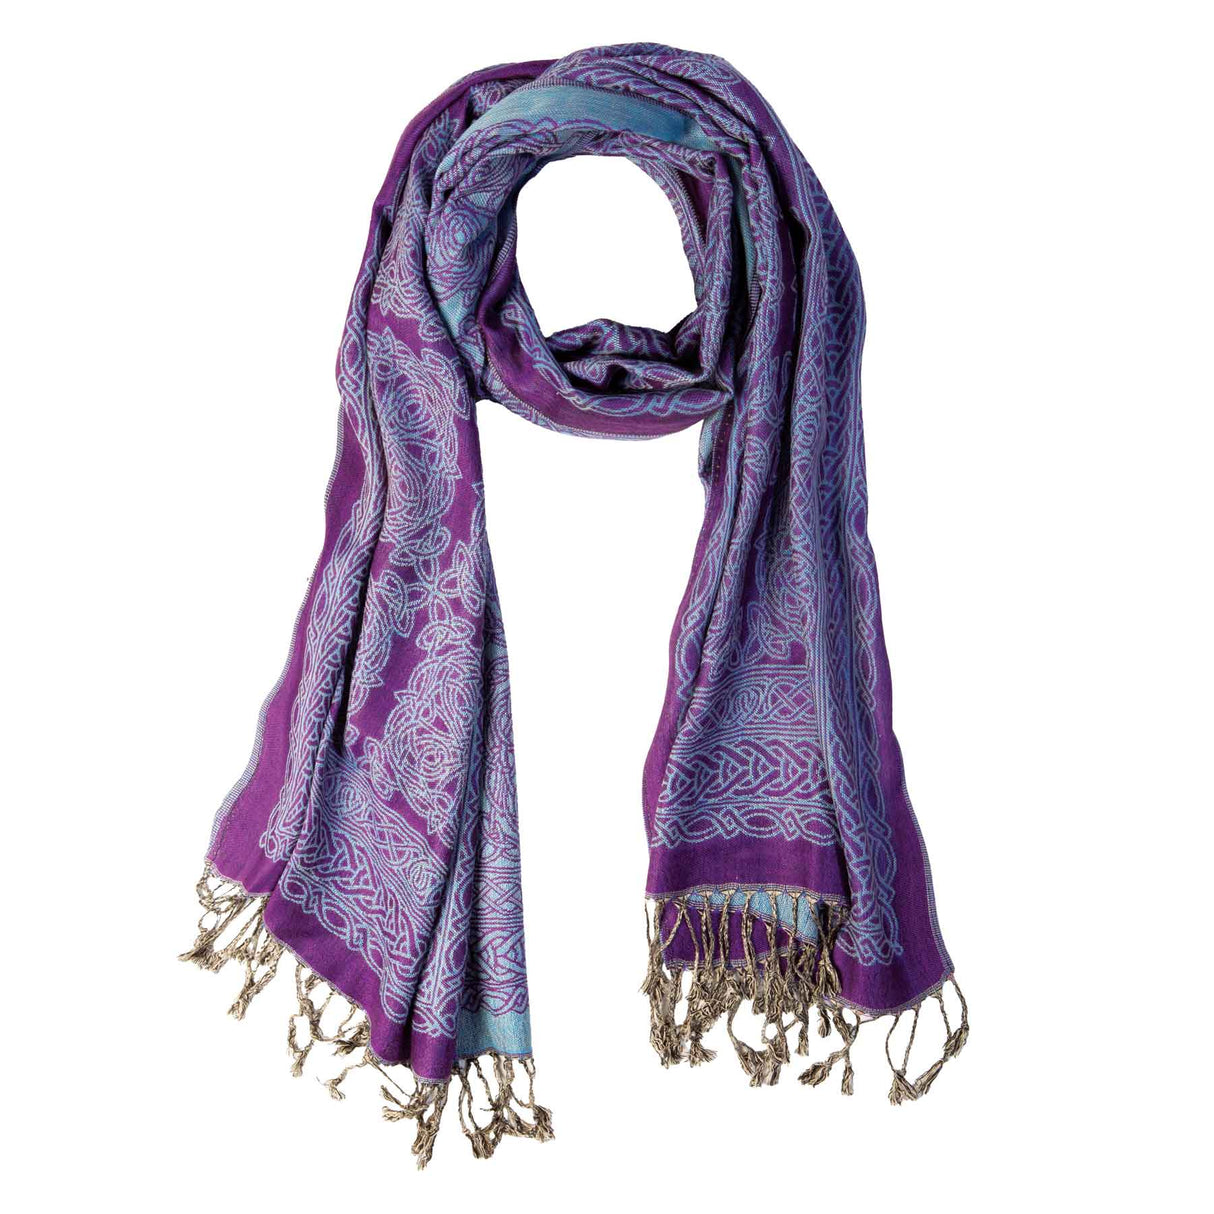 Small Celtic Knot Weave Reversible Pashmina Scarf, Purple/Light Blue - Creative Irish Gifts